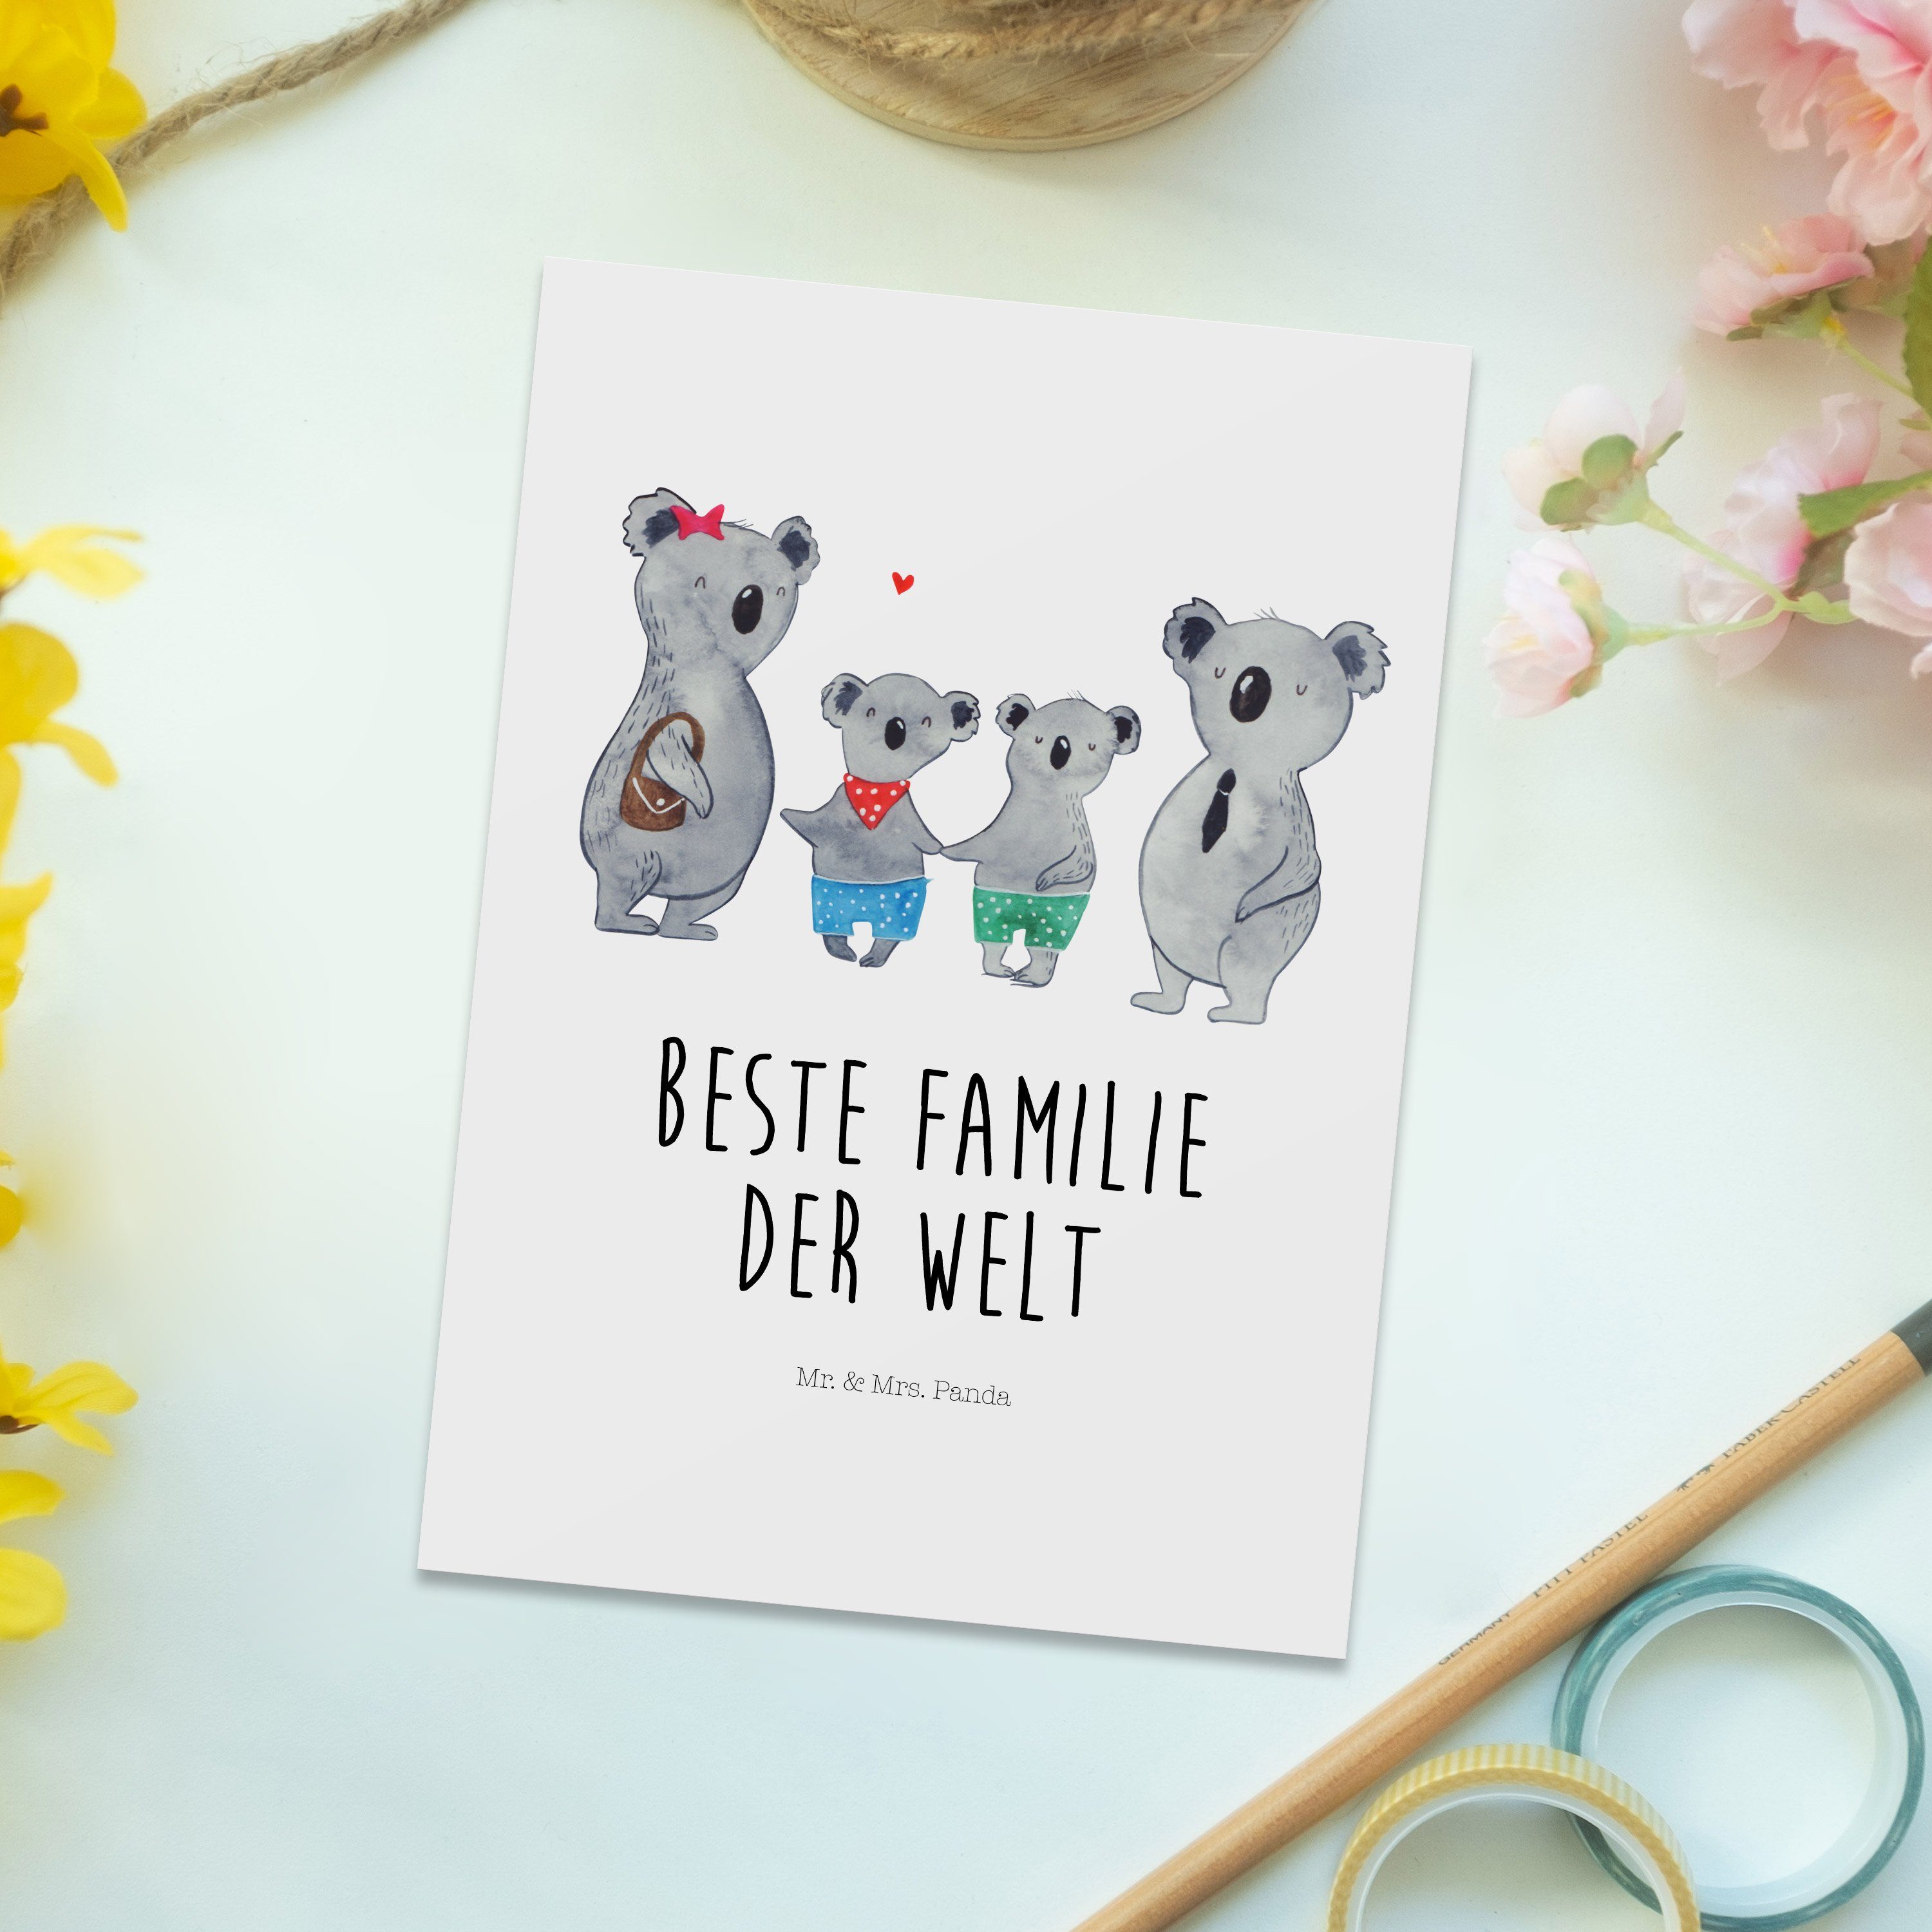 Mr. & Mrs. Panda Postkarte Geschenkkarte, Weiß zwei Einladung Familie Koala Karte, Geschenk, - 